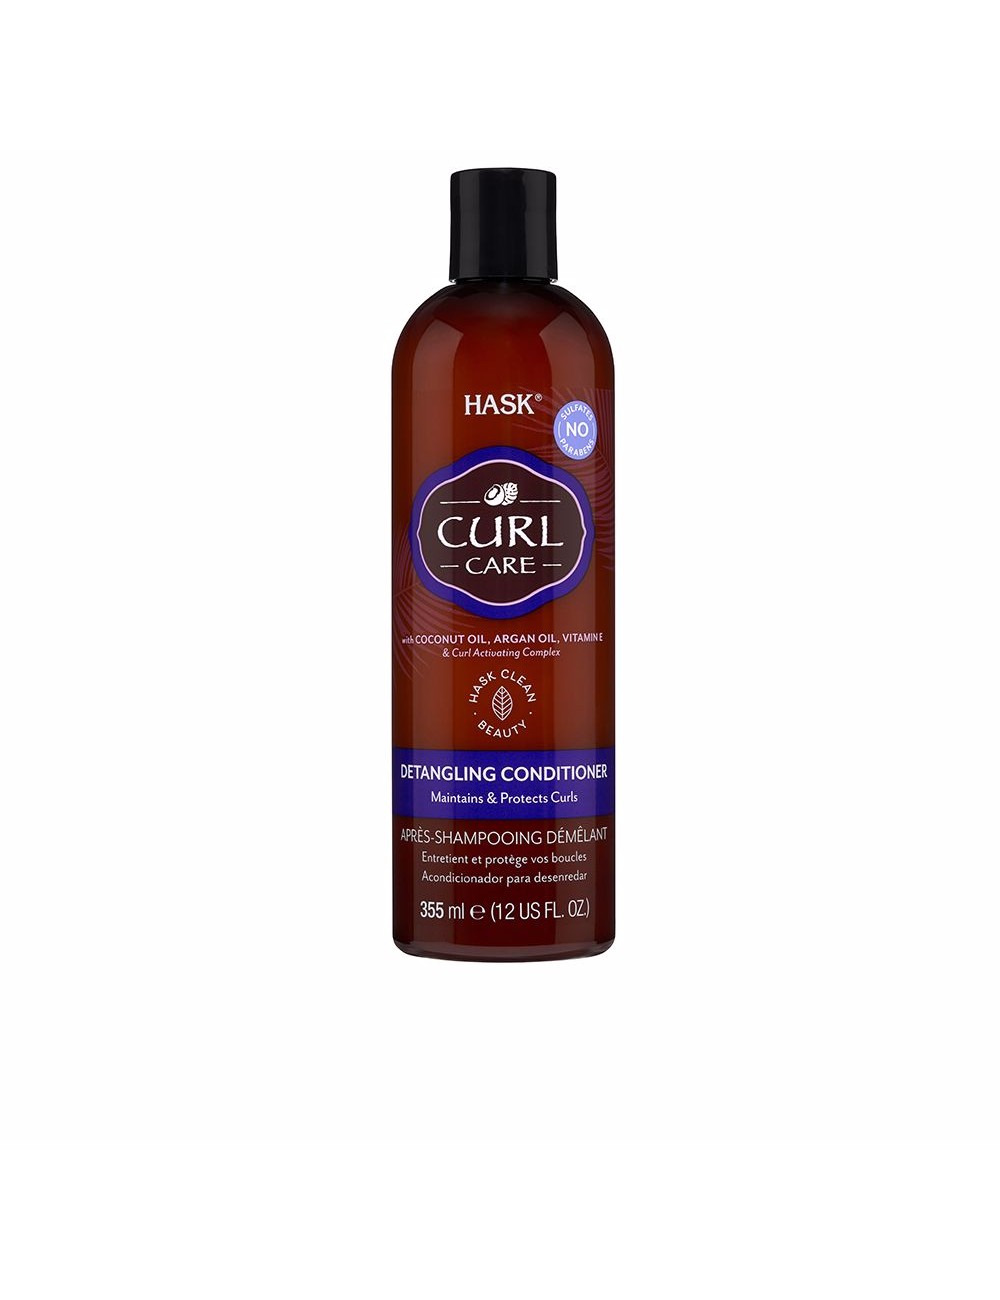 CURL CARE après-shampoing démêlant 355 ml